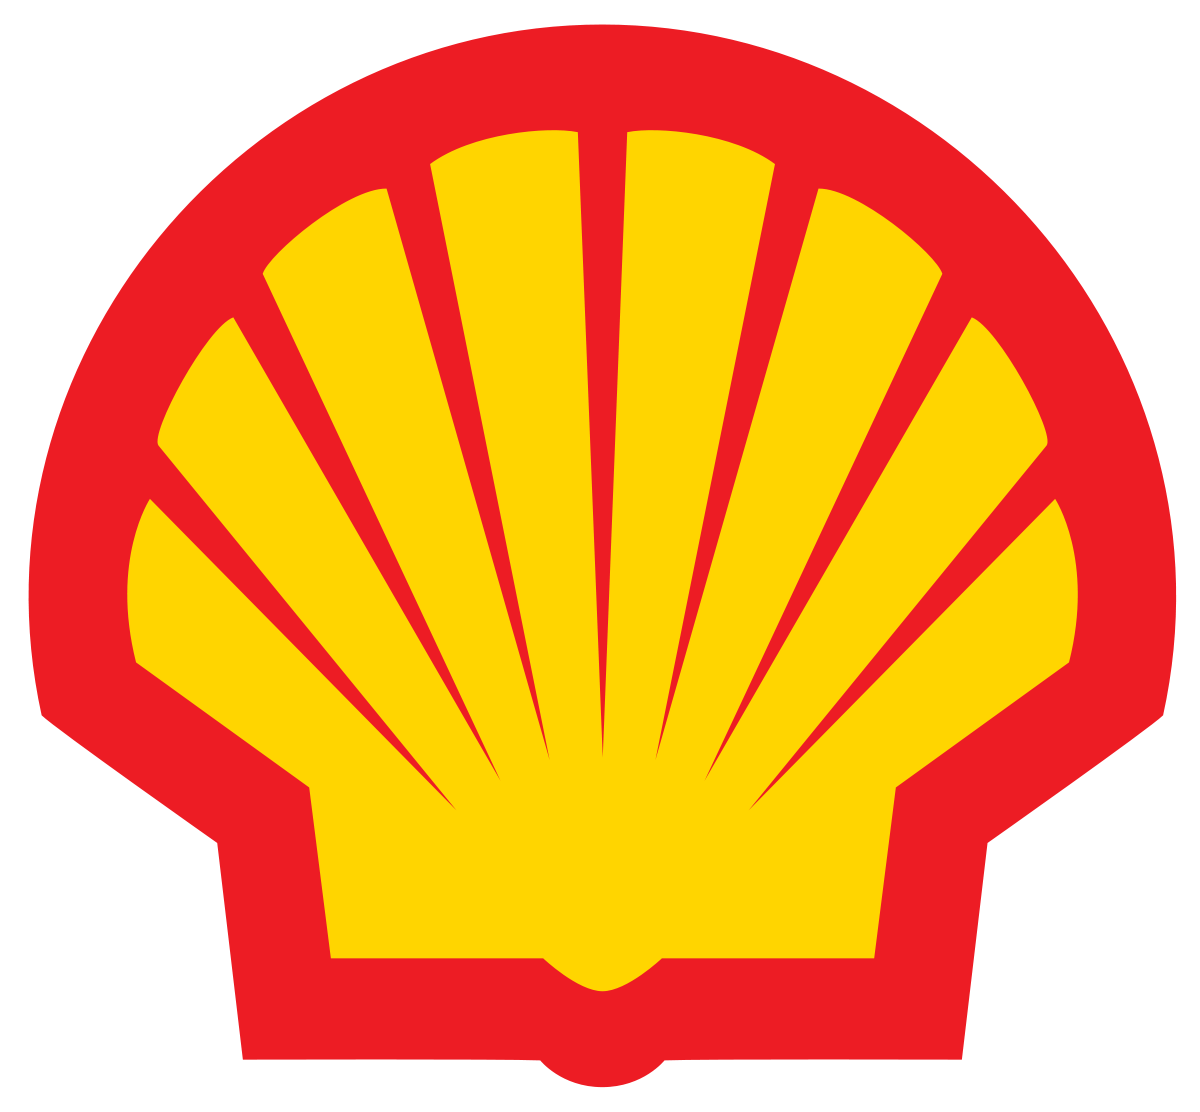 Oil and Gas Company Logo - Shell Oil Company